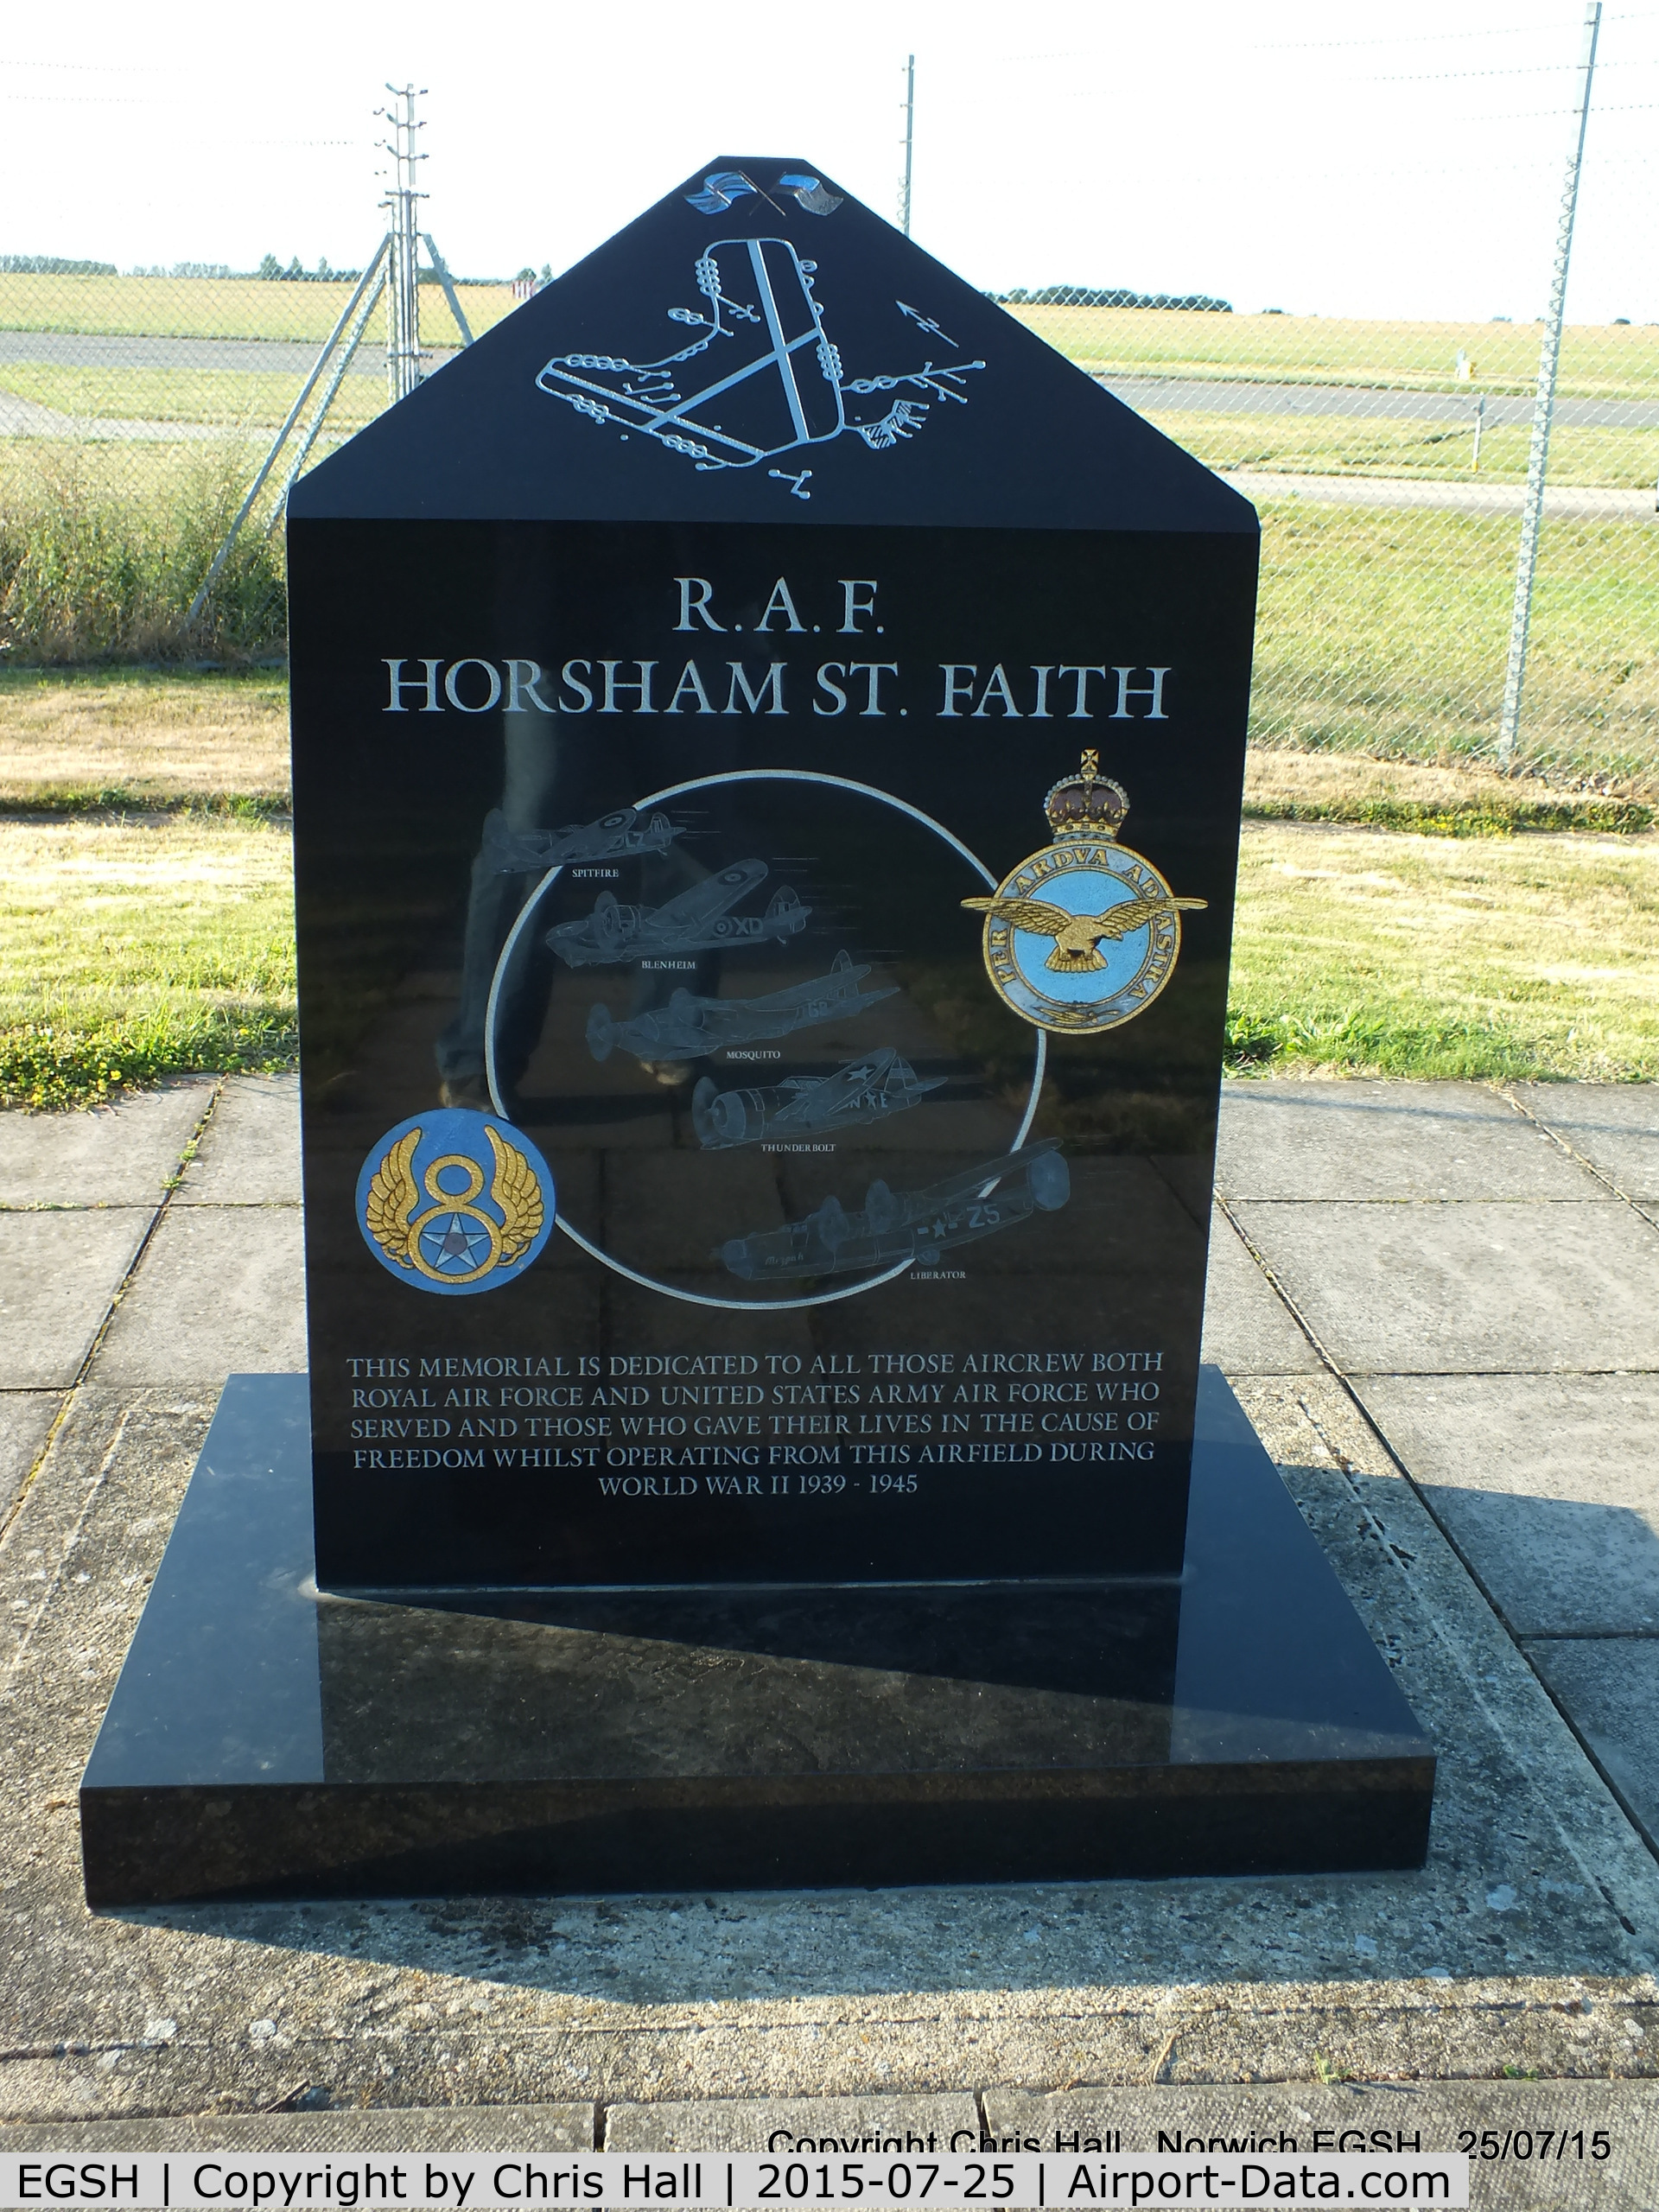 Norwich International Airport, Norwich, England United Kingdom (EGSH) - Memorial at Norwich Airport, former RAF Horsham St Faith